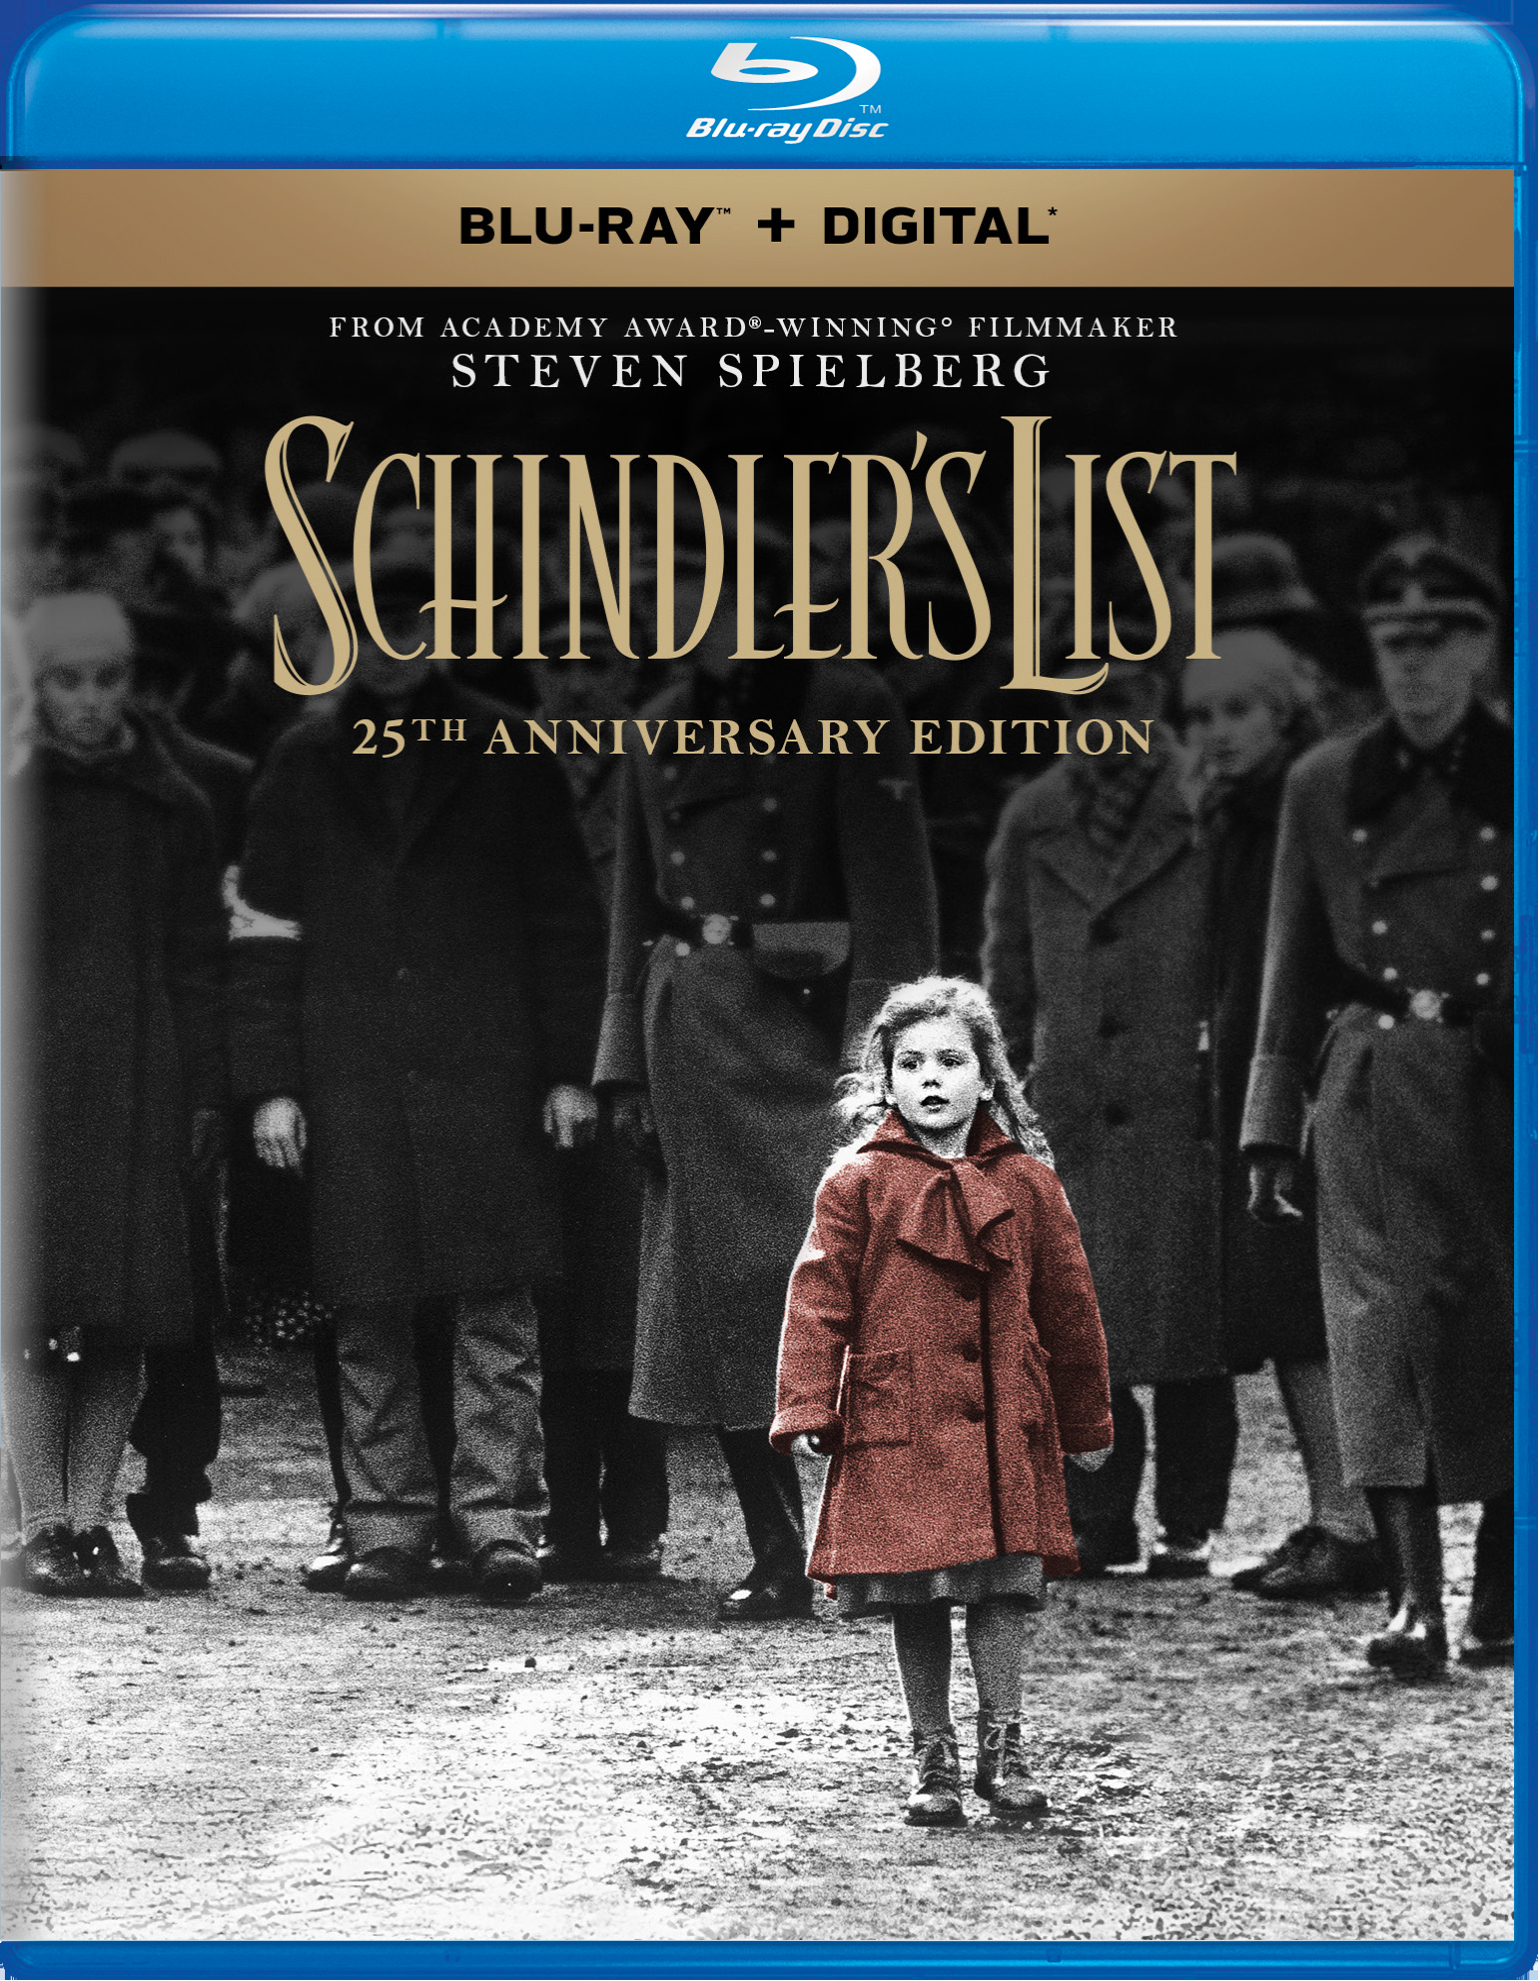 Schindler's List (25th Anniversary Edition) - Blu-ray [ 1993 ] - Drama Movies on Blu-ray